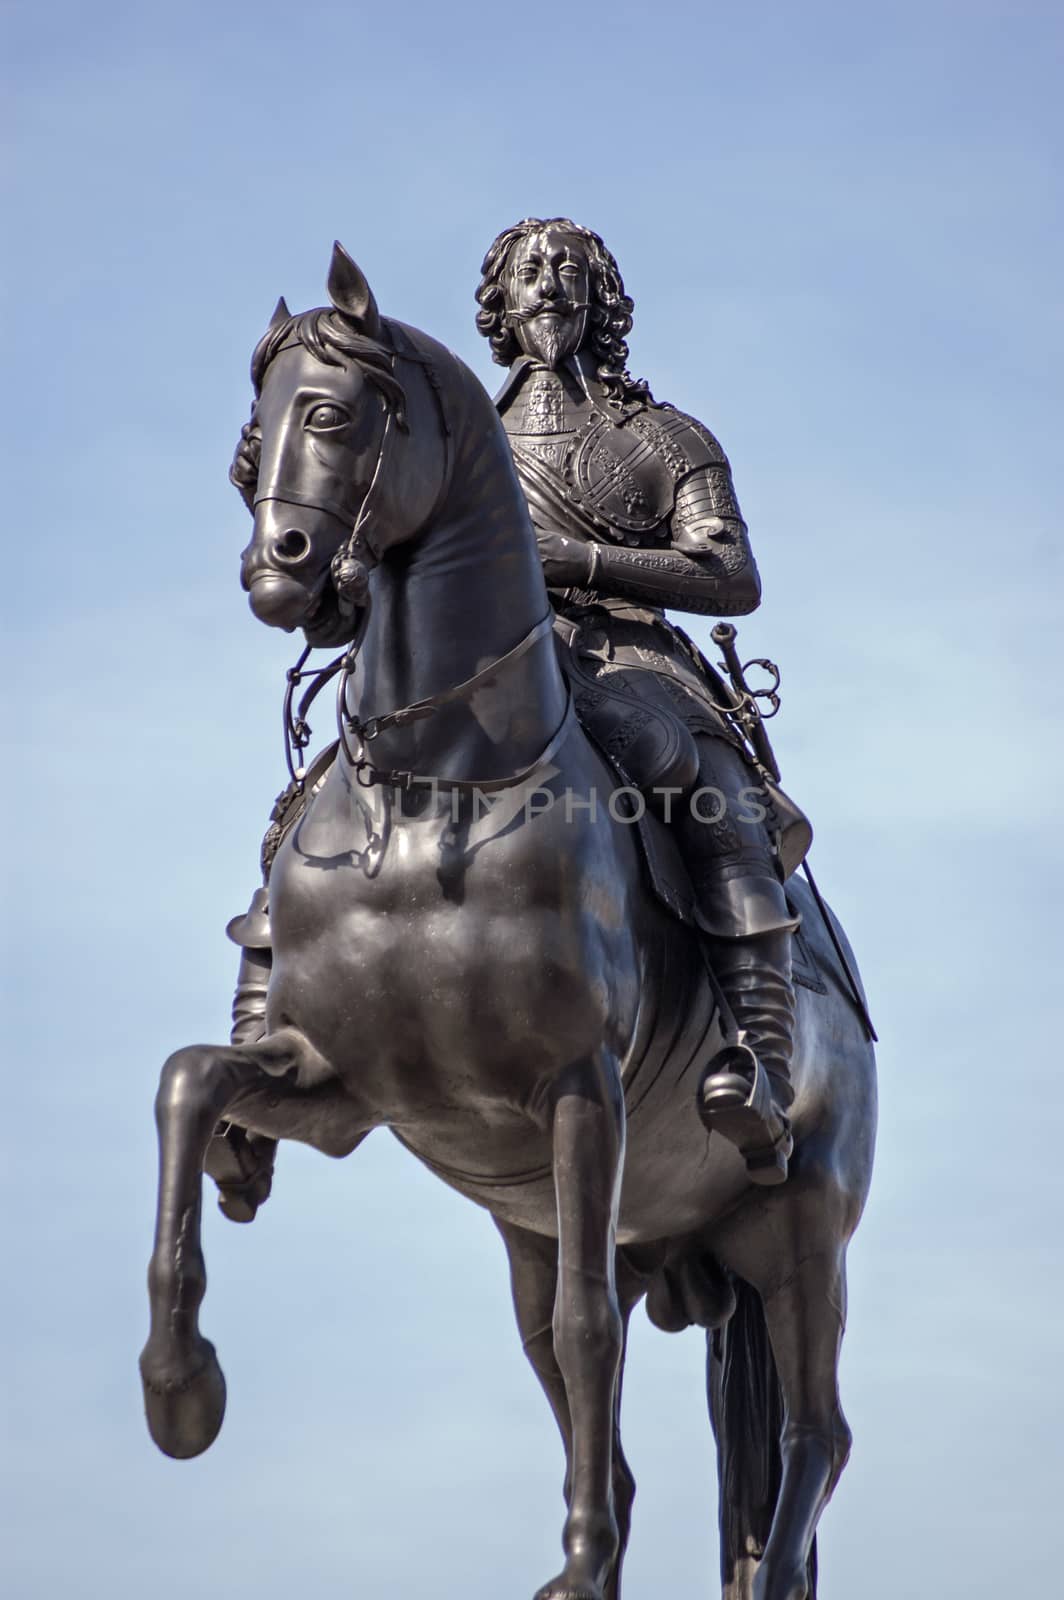 King Charles I statue, Trafalgar Square, London by BasPhoto